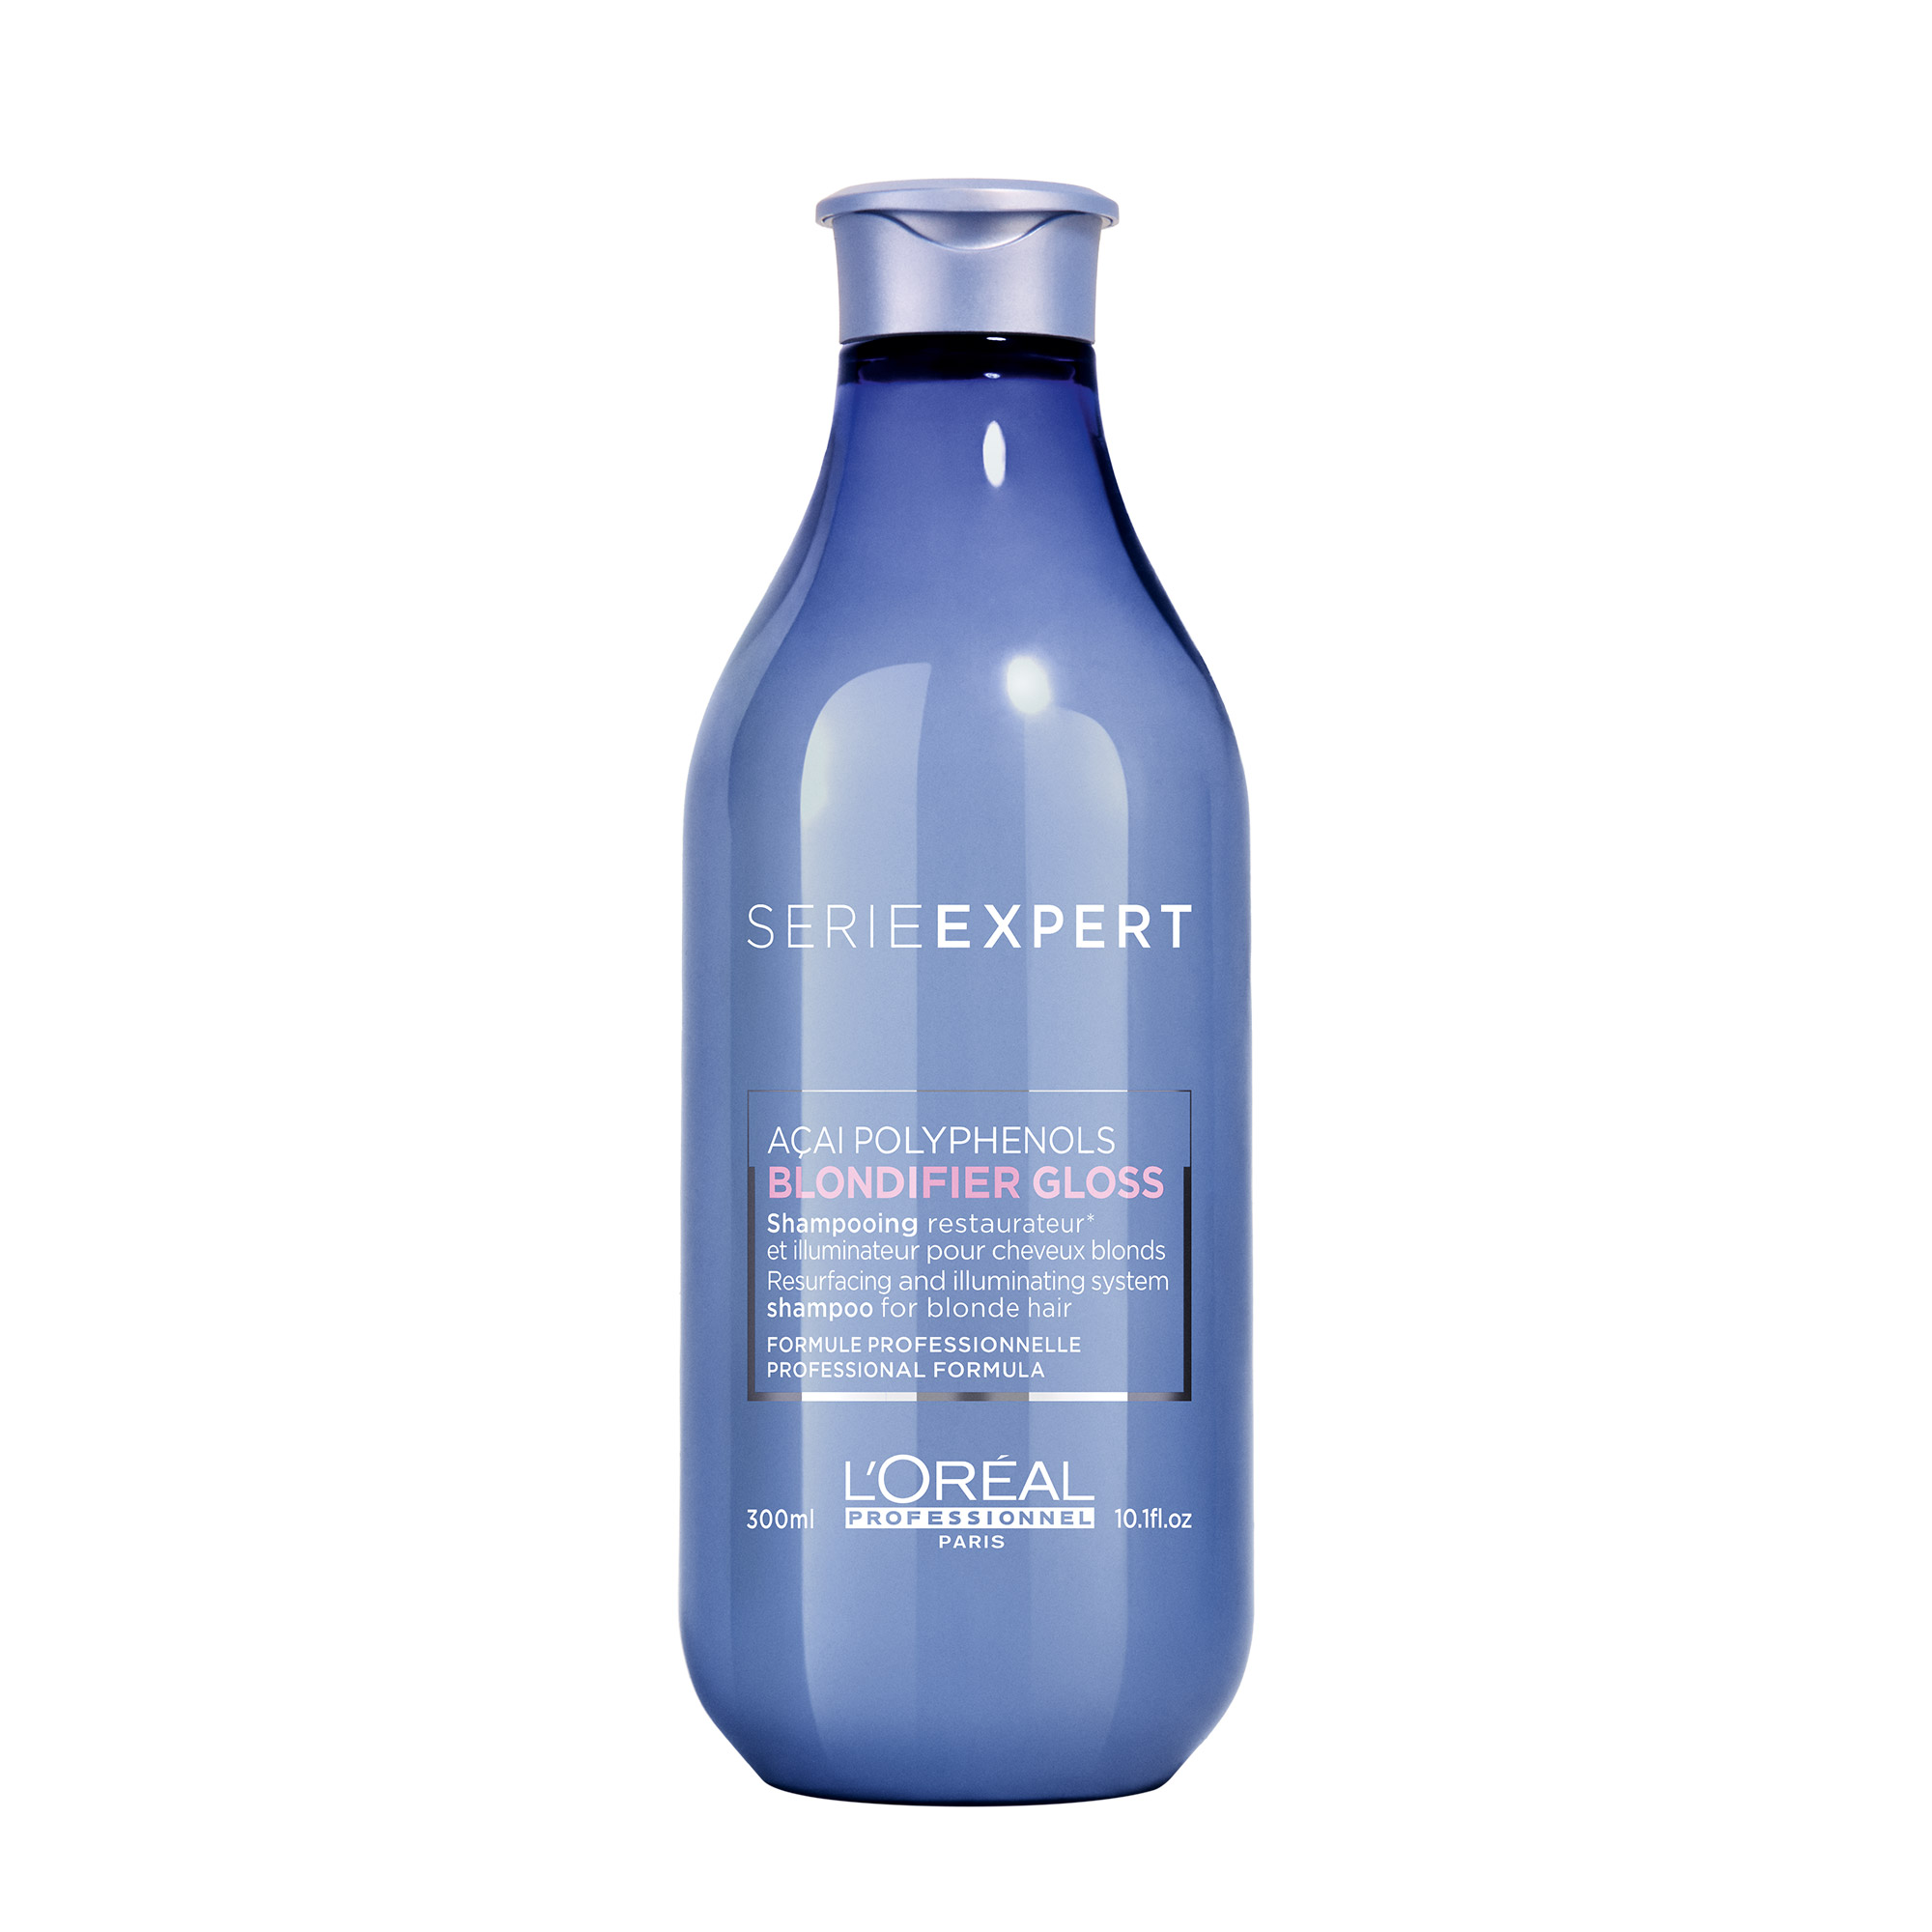 L'Oréal Professionnel LOrealProfessionnel Blondifier Shampoo Gloss, 300